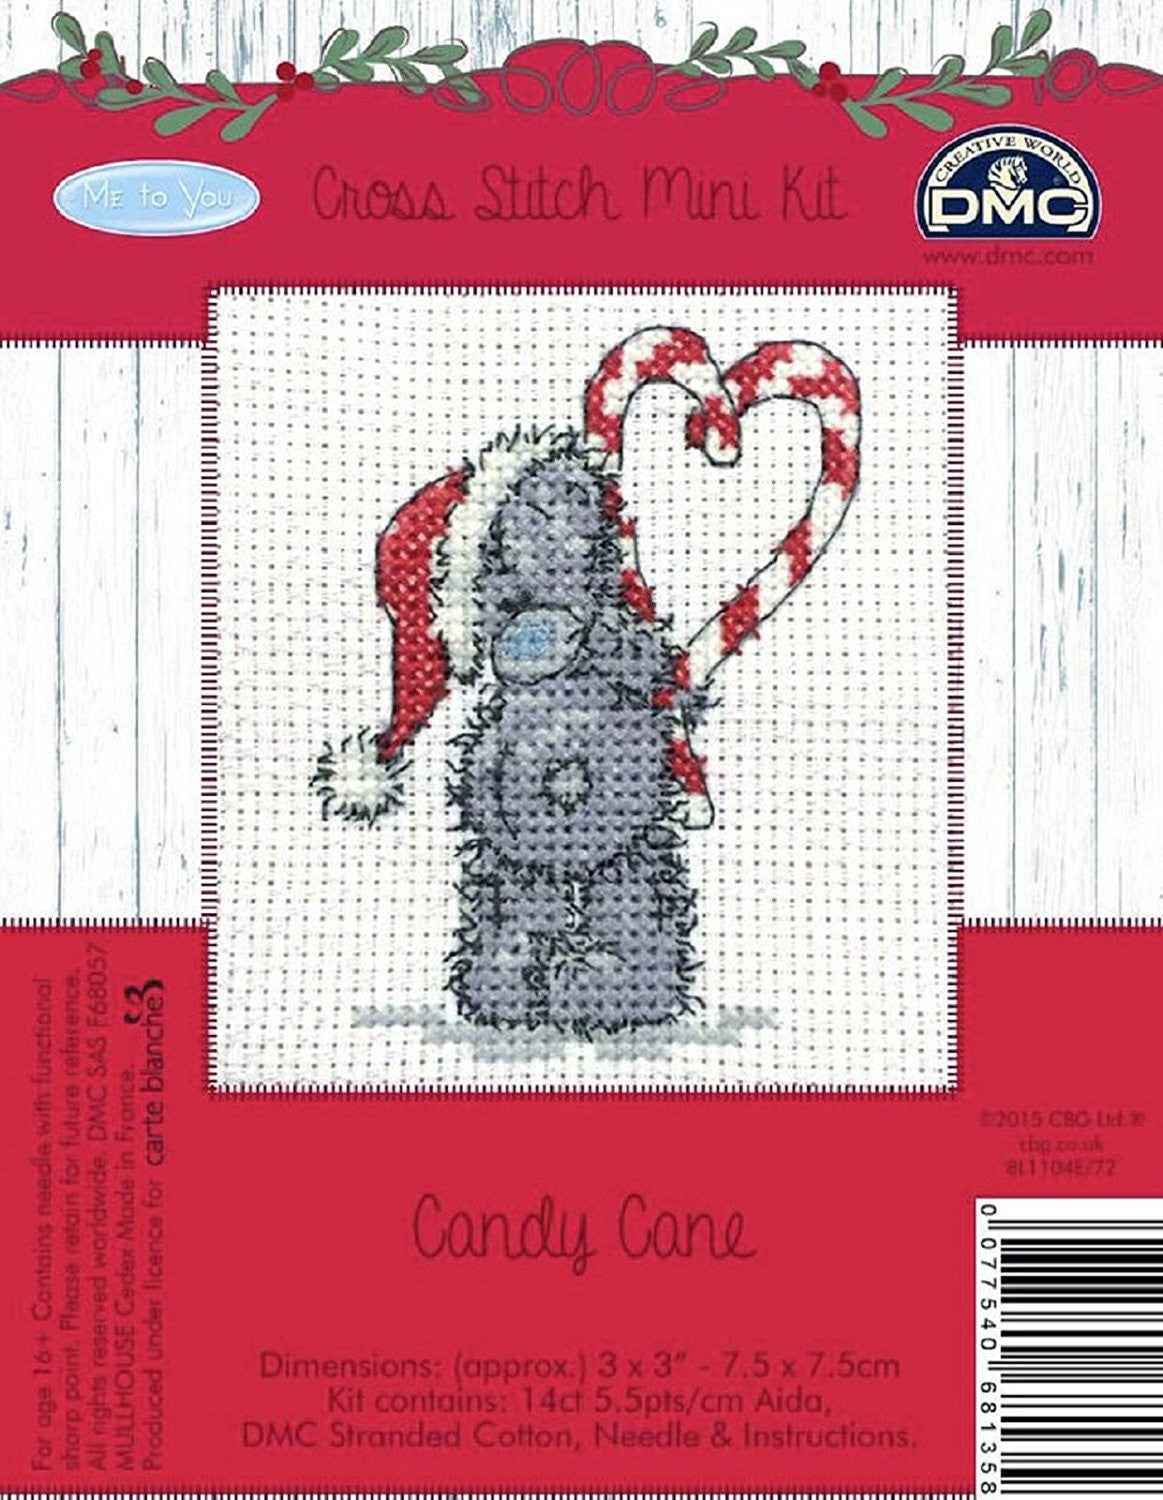 DMC Me to You Christmas Tatty Teddy Cross Stitch Mini Kit - Candy Cane - hanrattycraftsgifts.co.uk